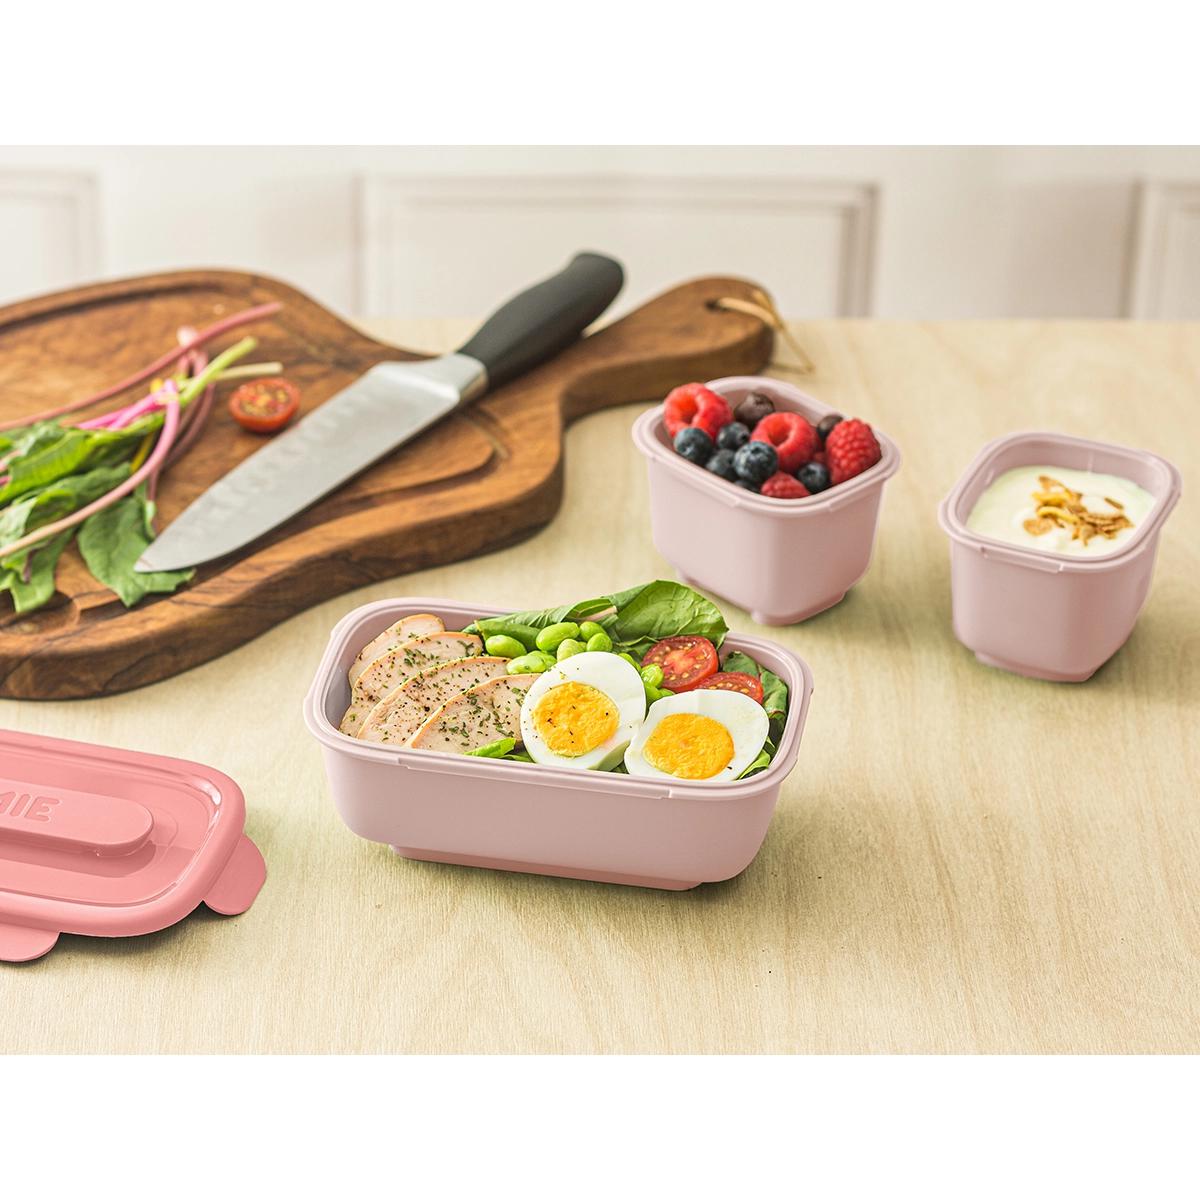 OmieGO Bio - Stone Kit - Modular Bento Box for Kids - Leakproof Bento Lunch Box